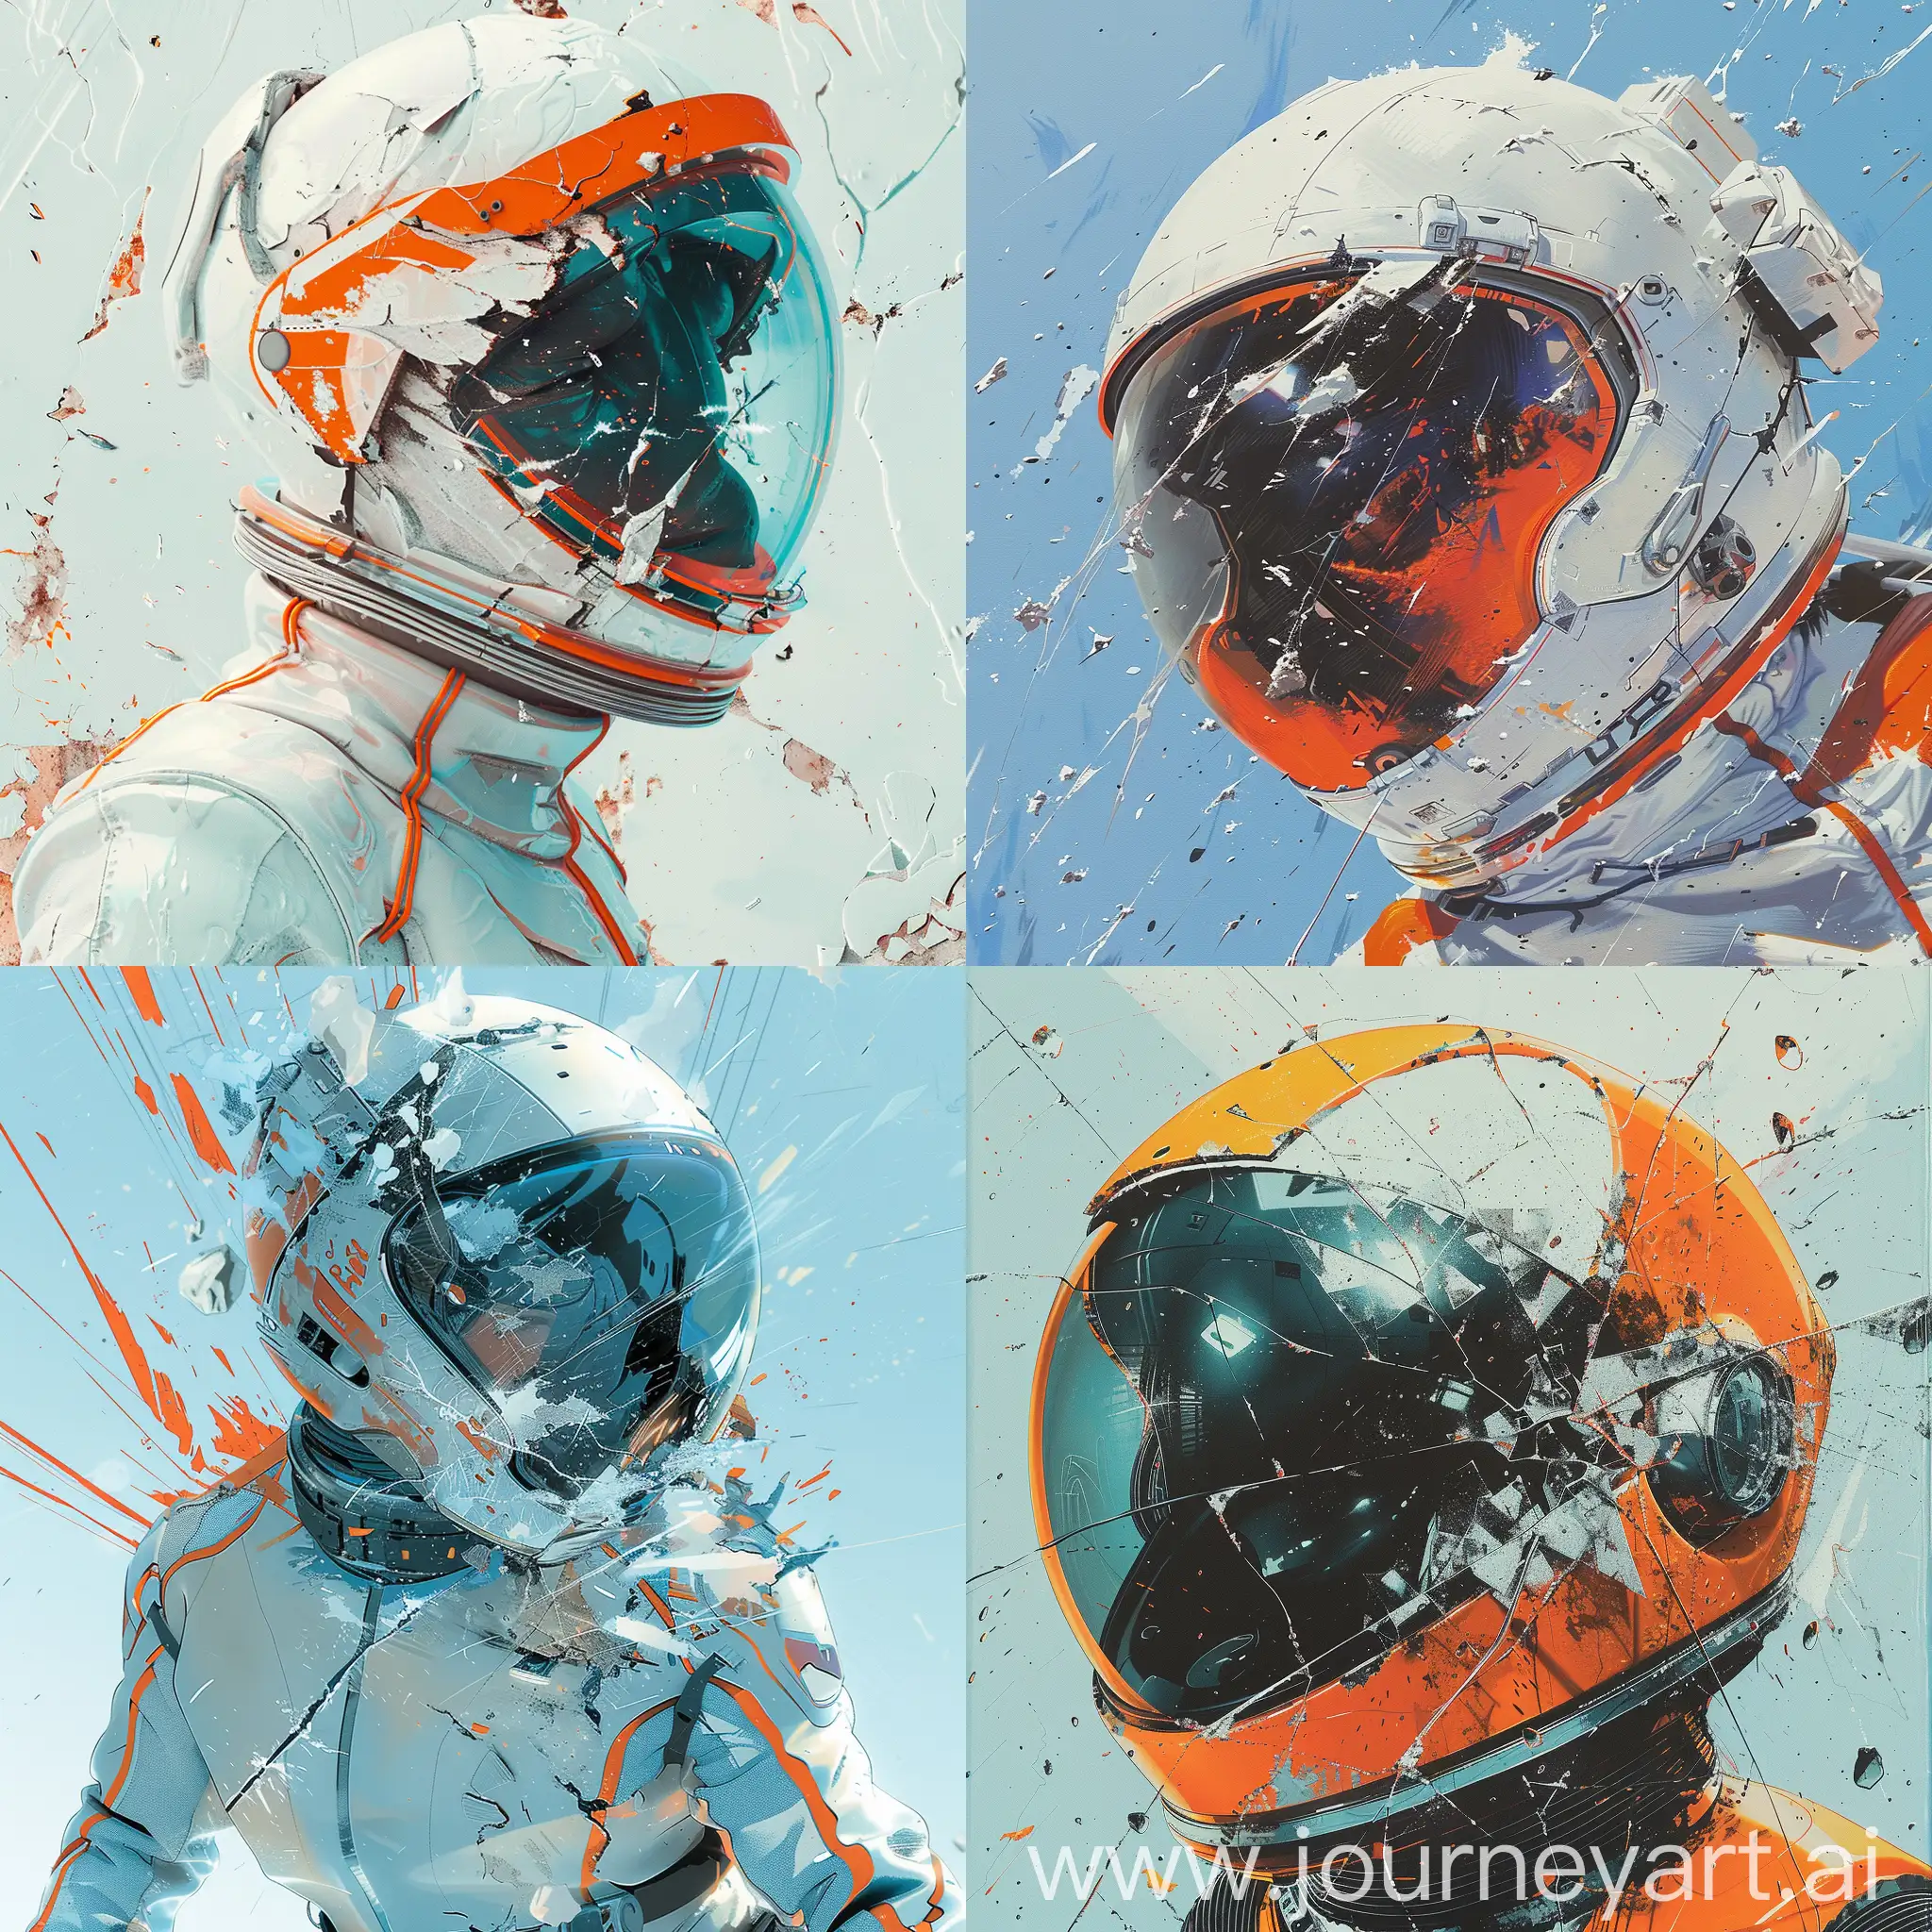 SciFi-Book-Cover-Crashed-Spacesuit-Helmet-in-WhiteBlueOrange-Palette